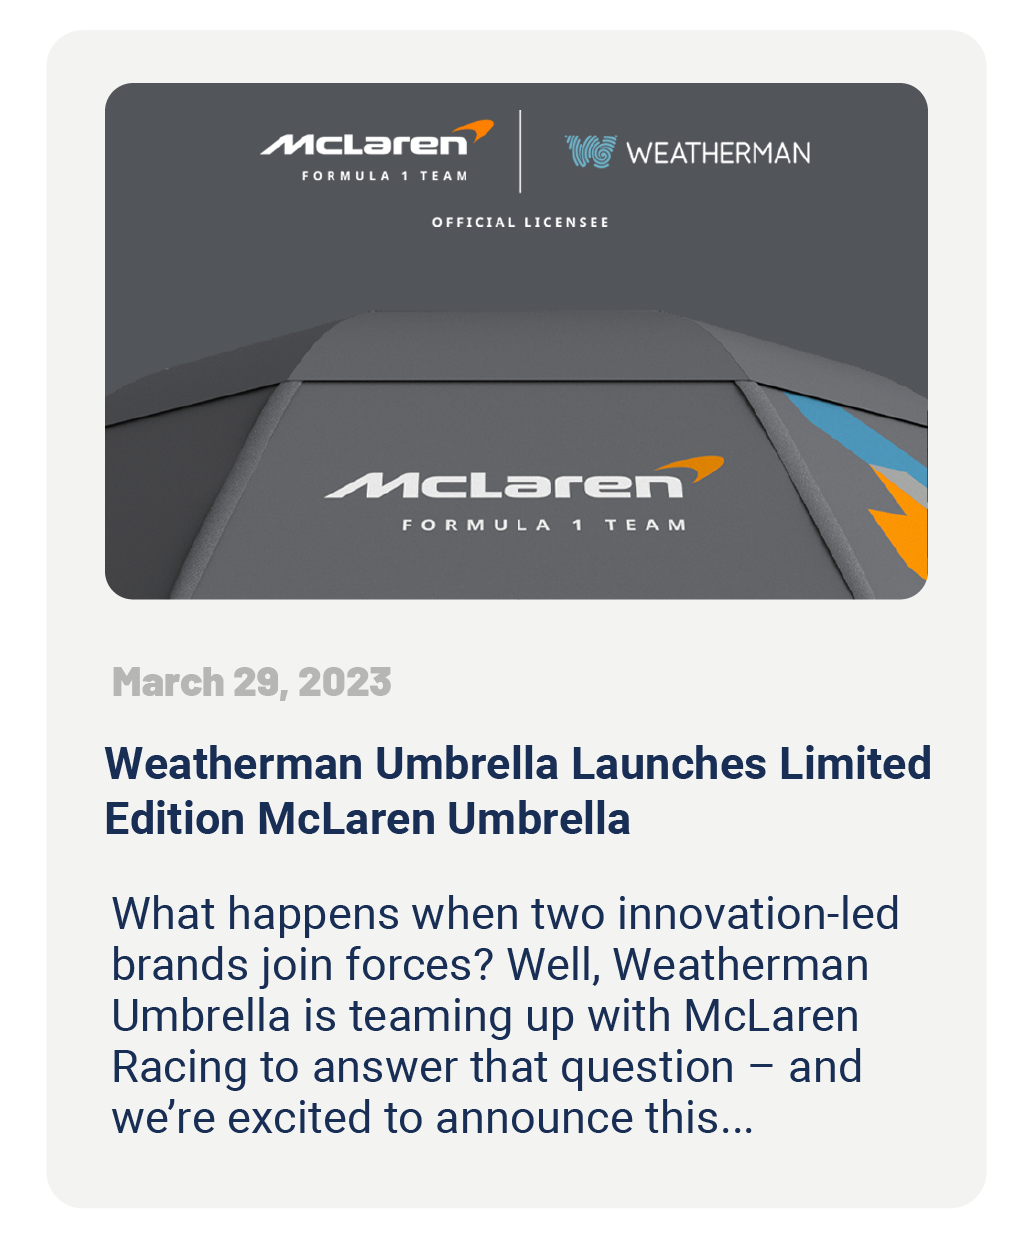 Weatherman Umbrella Launches Limited Edition McLaren Umbrella